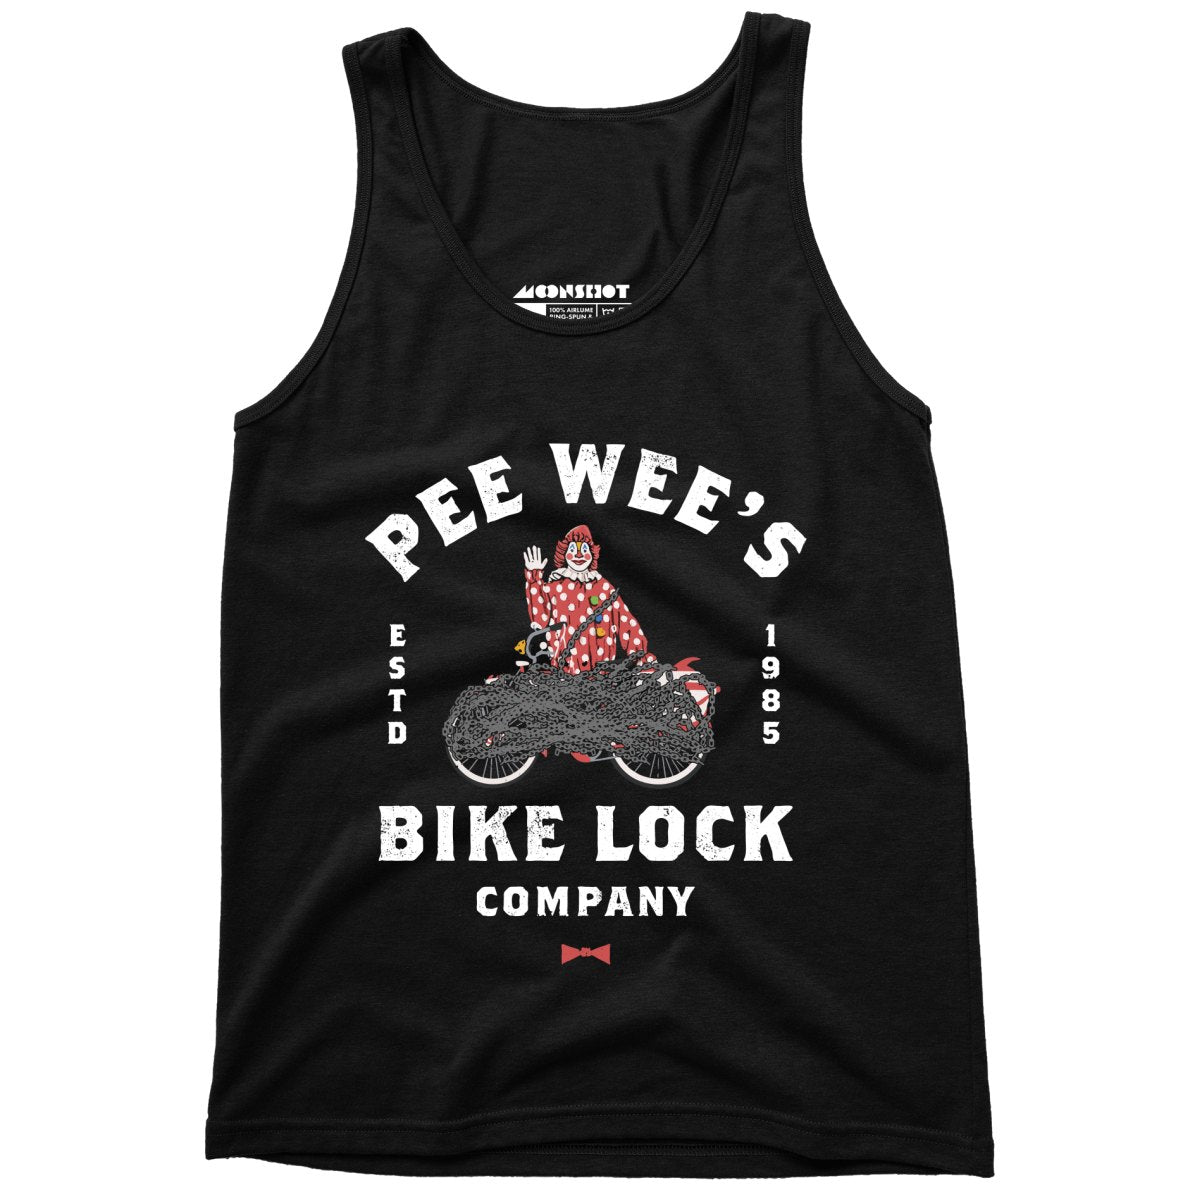 Pee Wee's Bike Lock Company - Unisex Tank Top